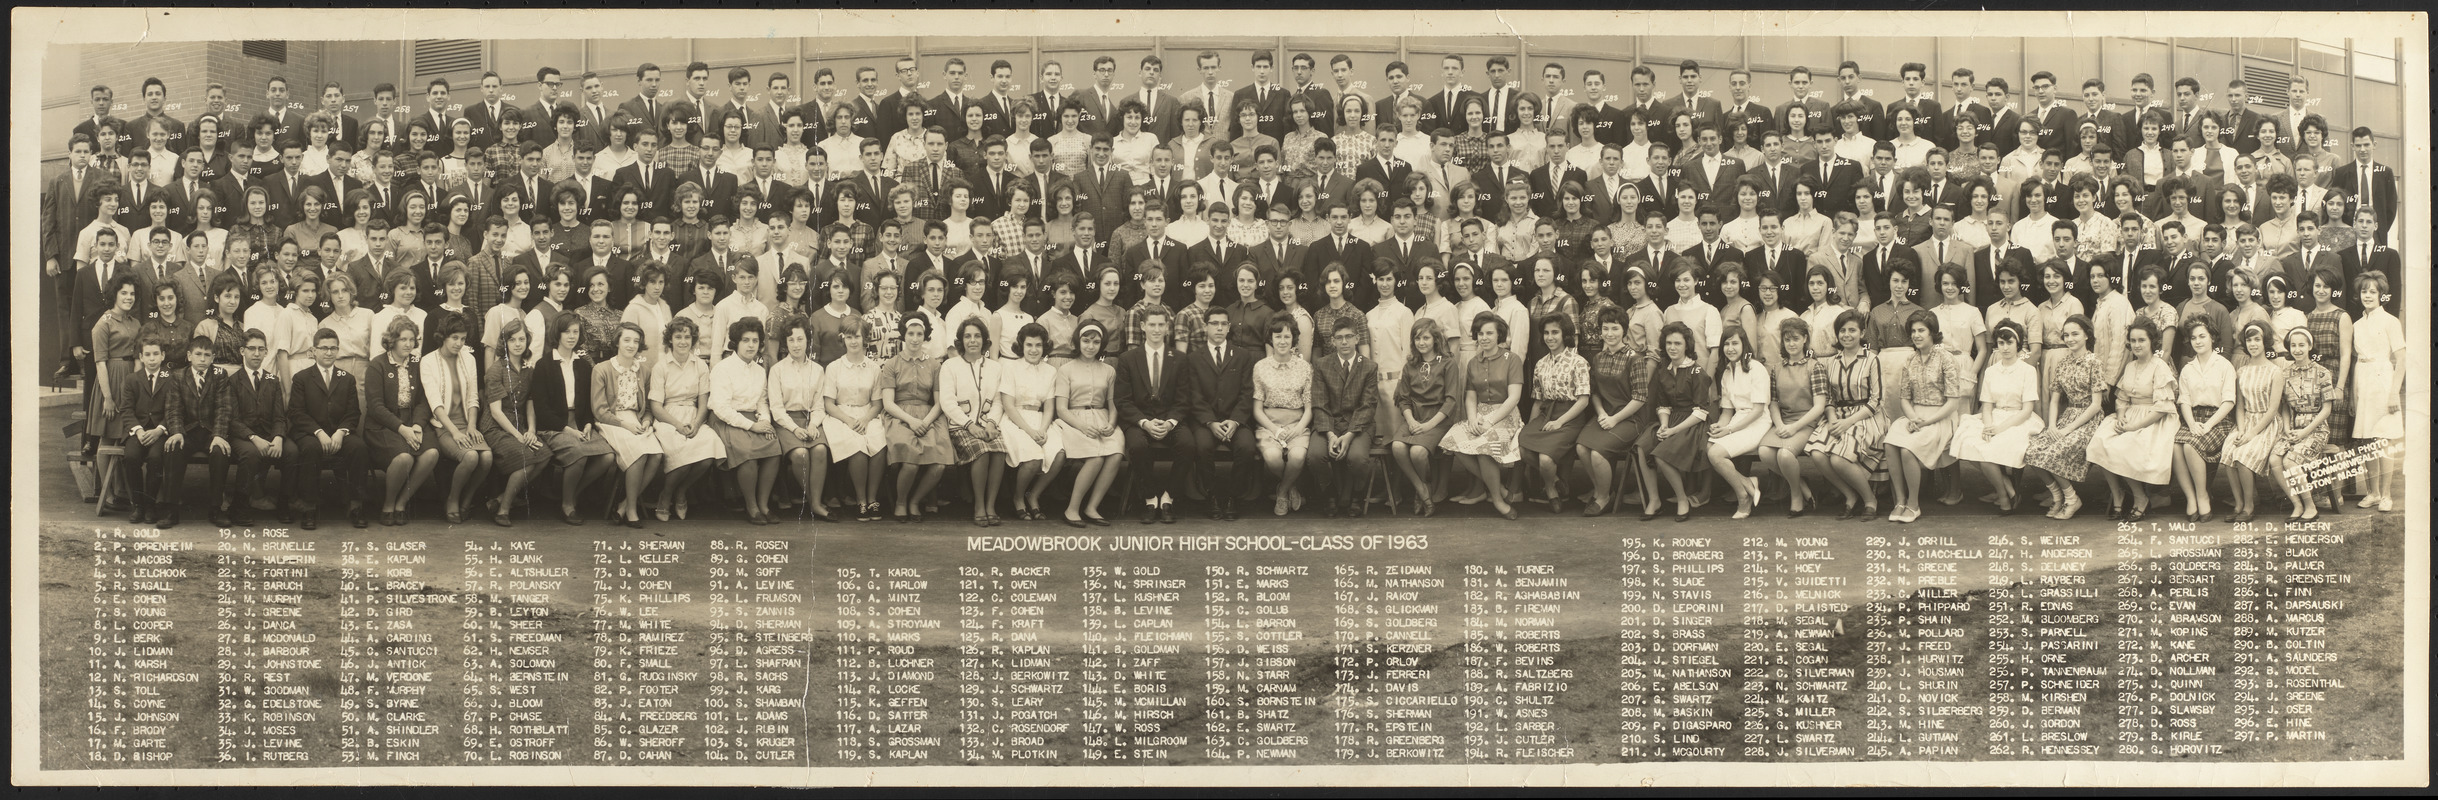 Meadowbrook Junior High School, class of 1963